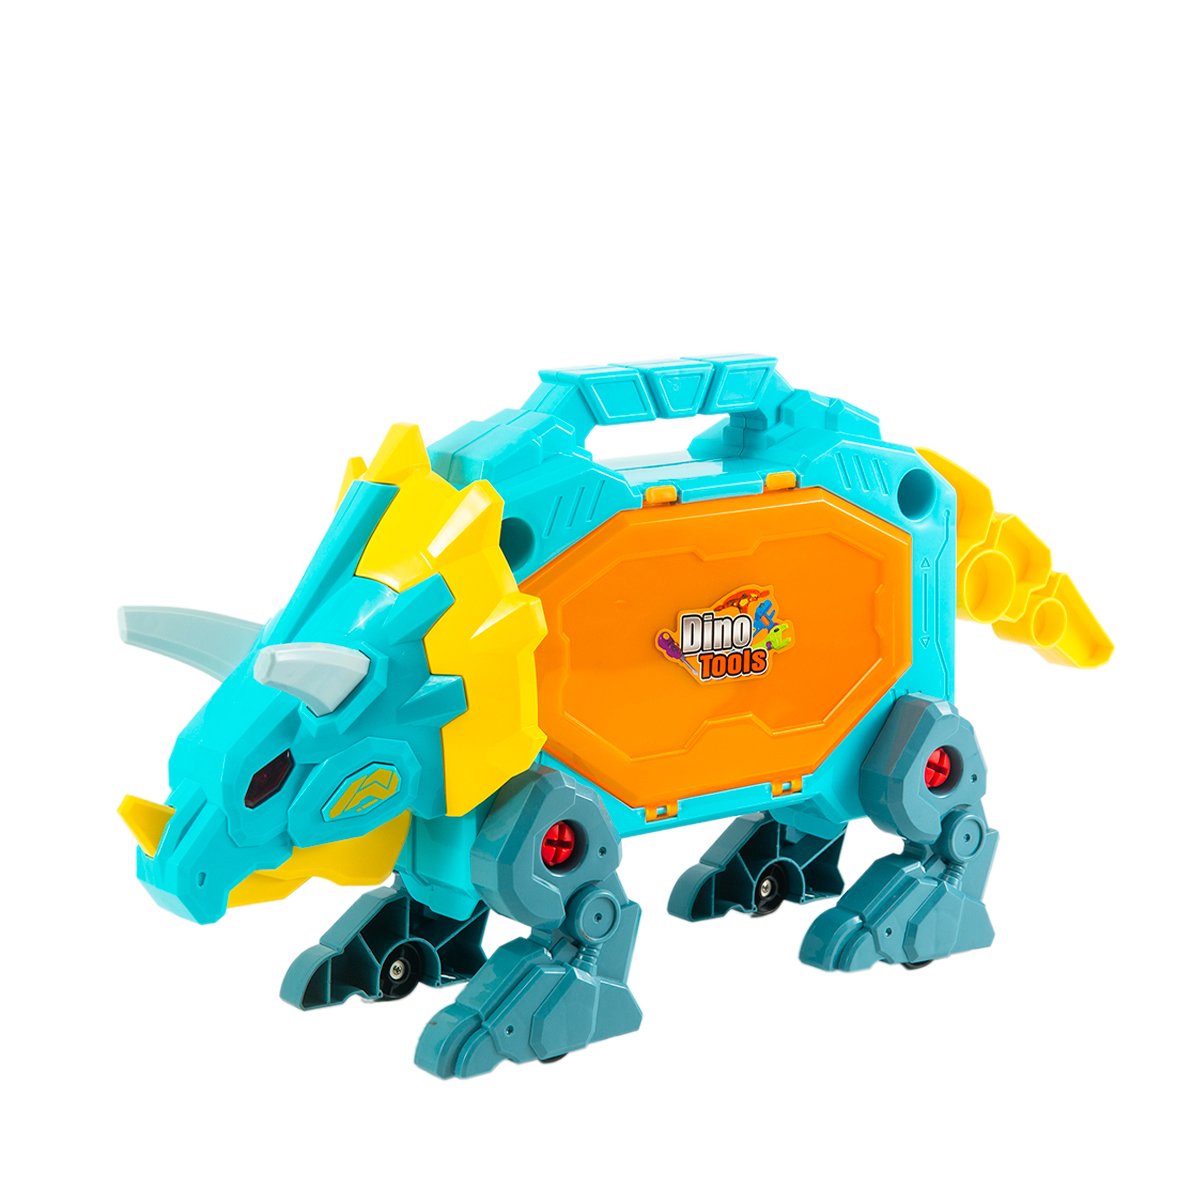 STEM Toys - Take Apart Dinosaur Assemble Toy for Kids — Voltz Toys